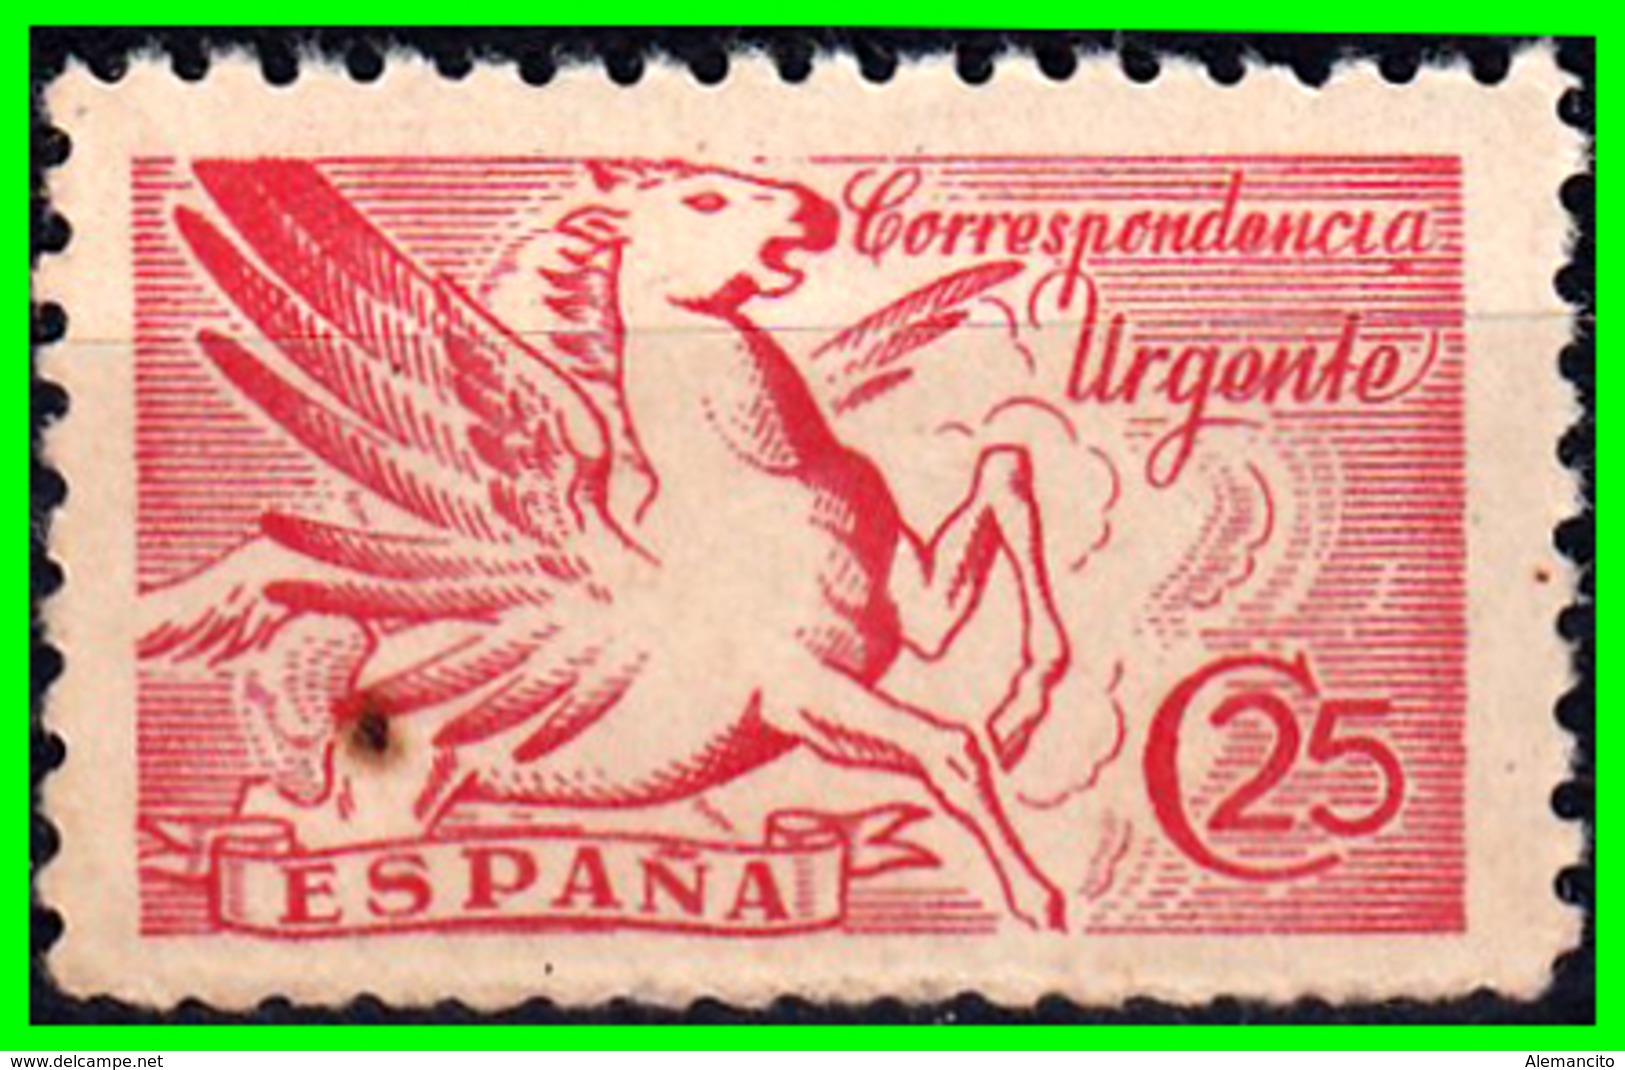 SELLO AÑO 1939 PEGASO - Eilbriefmarken